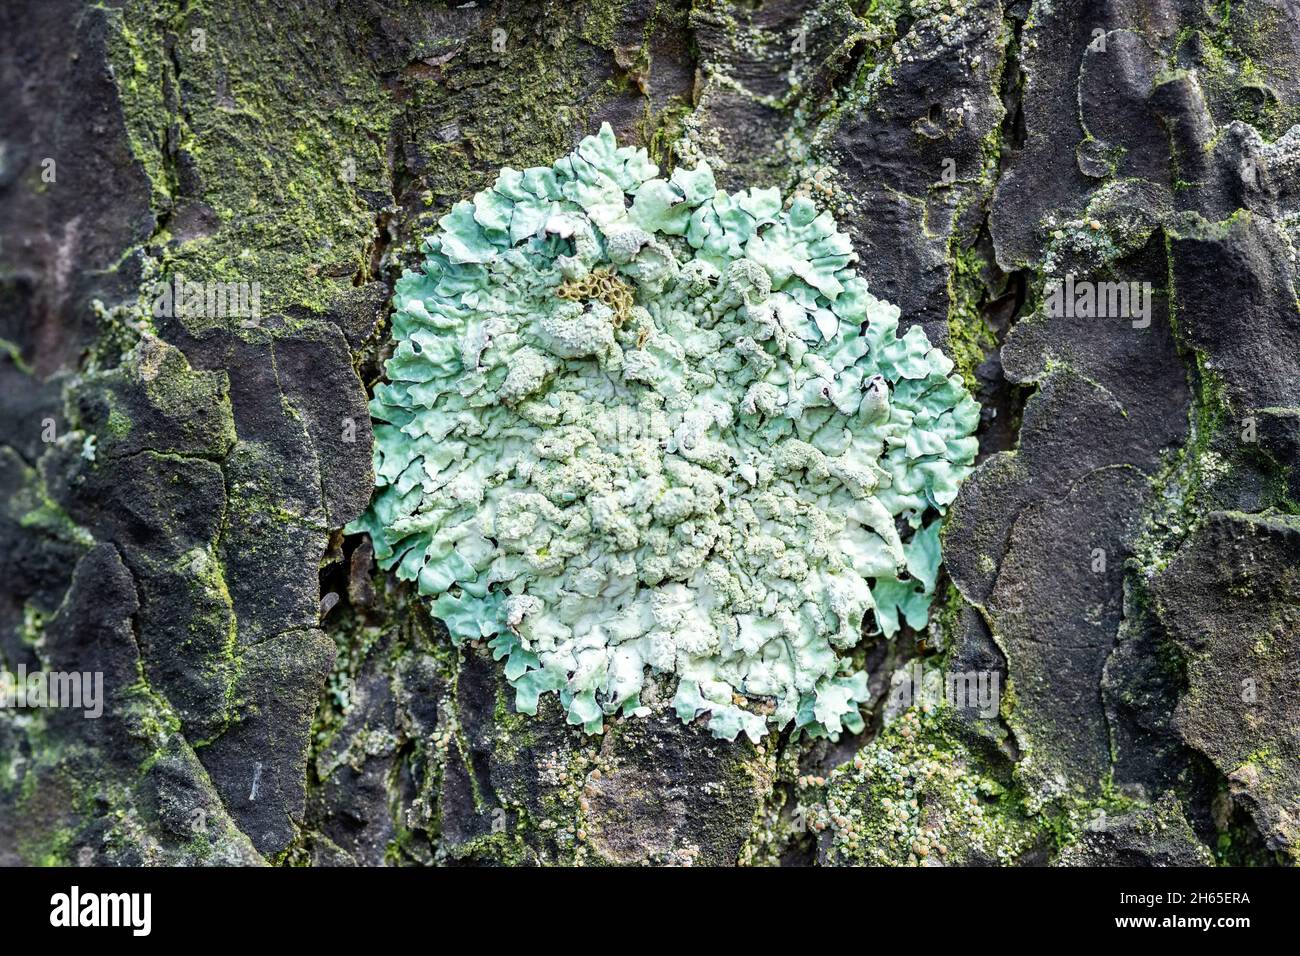 Lichen Parmelia sulcata on pine bark in the forest, close-up Stock Photo